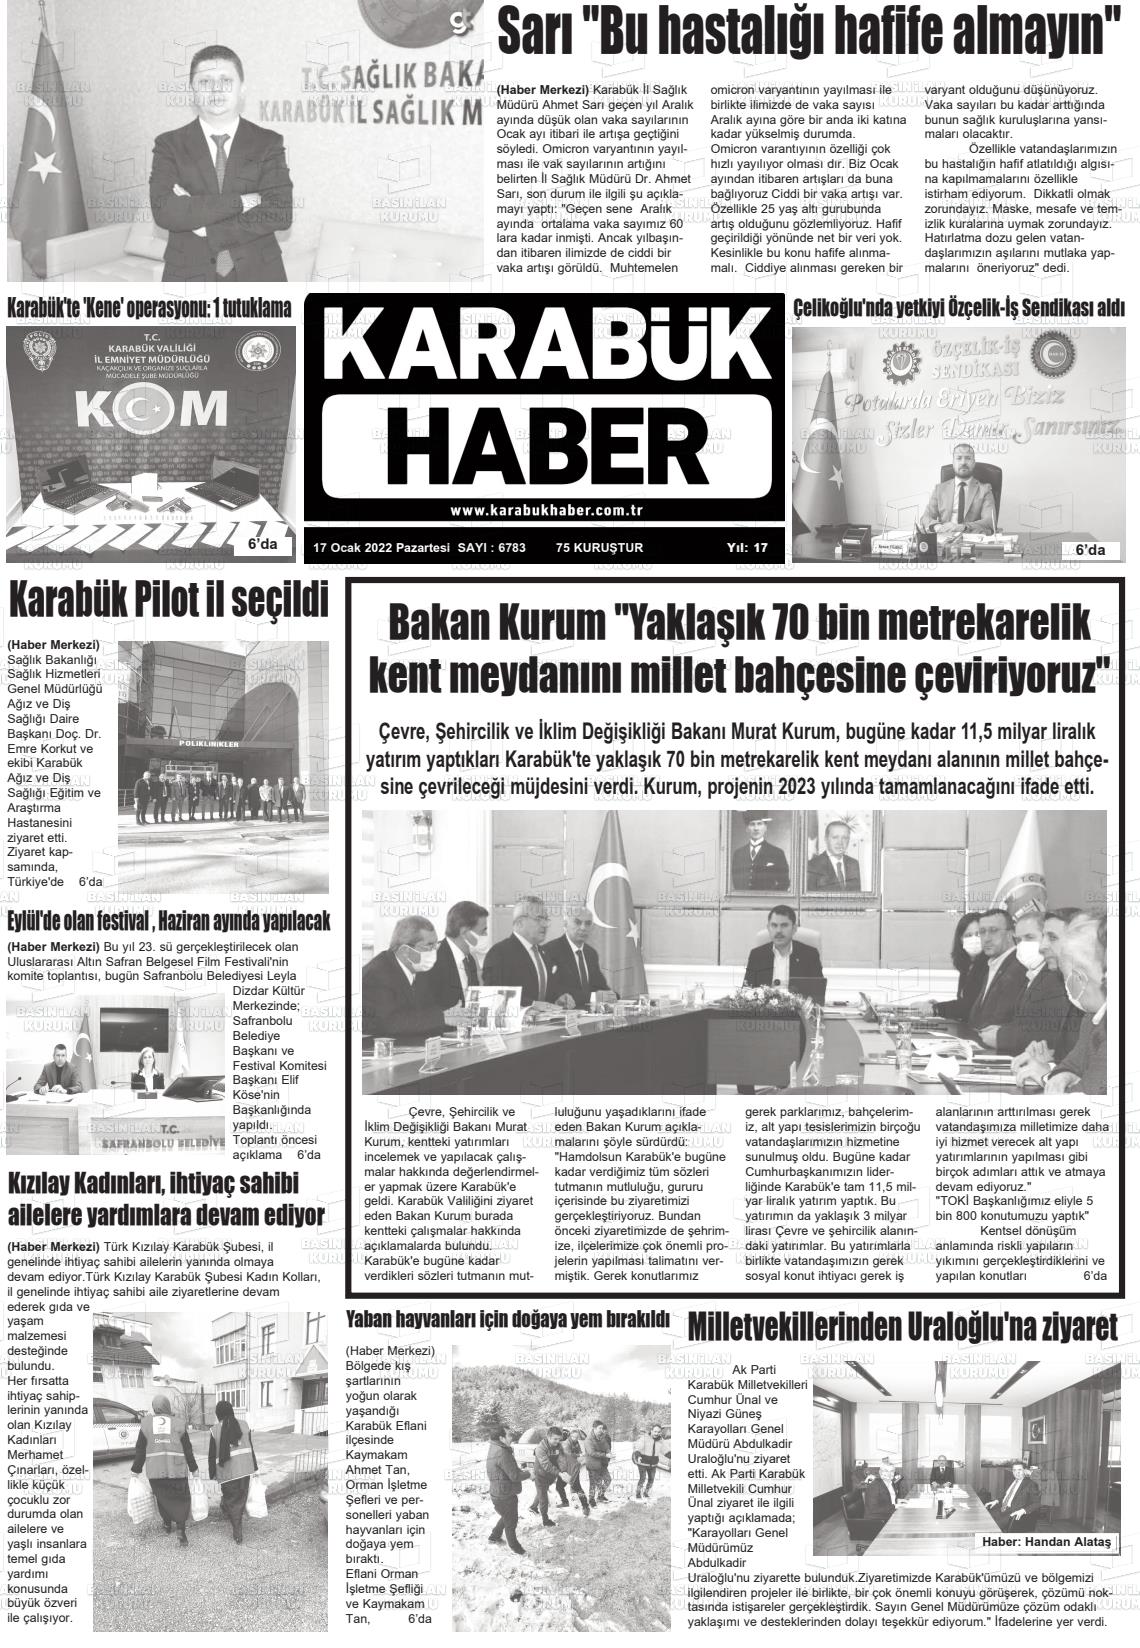 17 Ocak 2022 Karabük Haber Gazete Manşeti